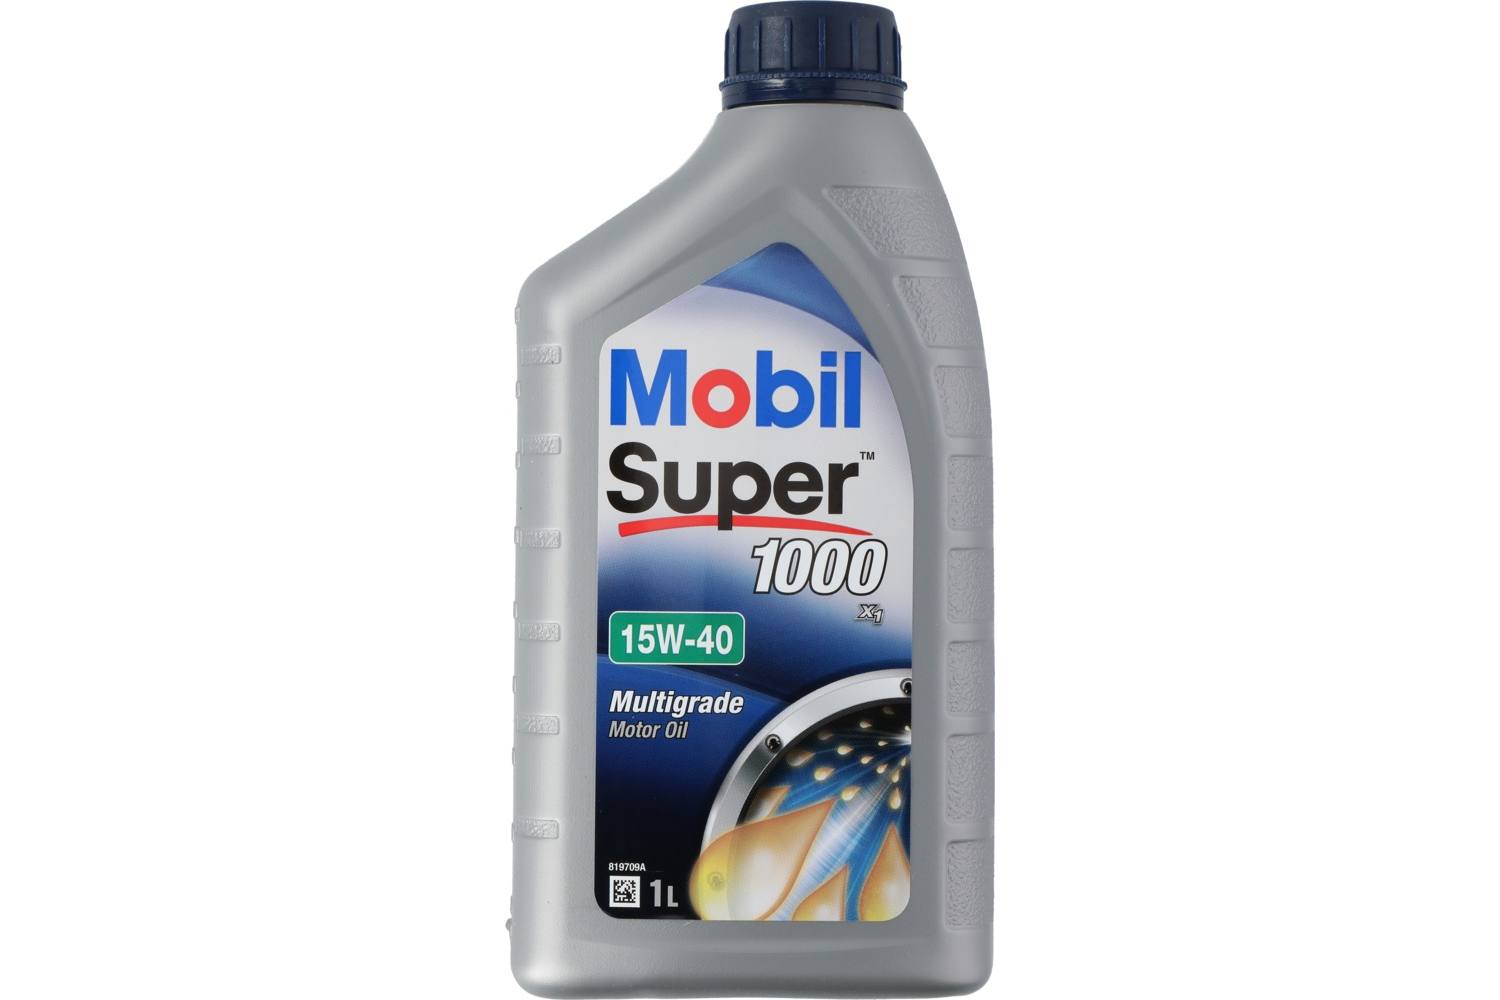 Motor oil, Mobil Super, 1000 X1 15W40, 1l 2